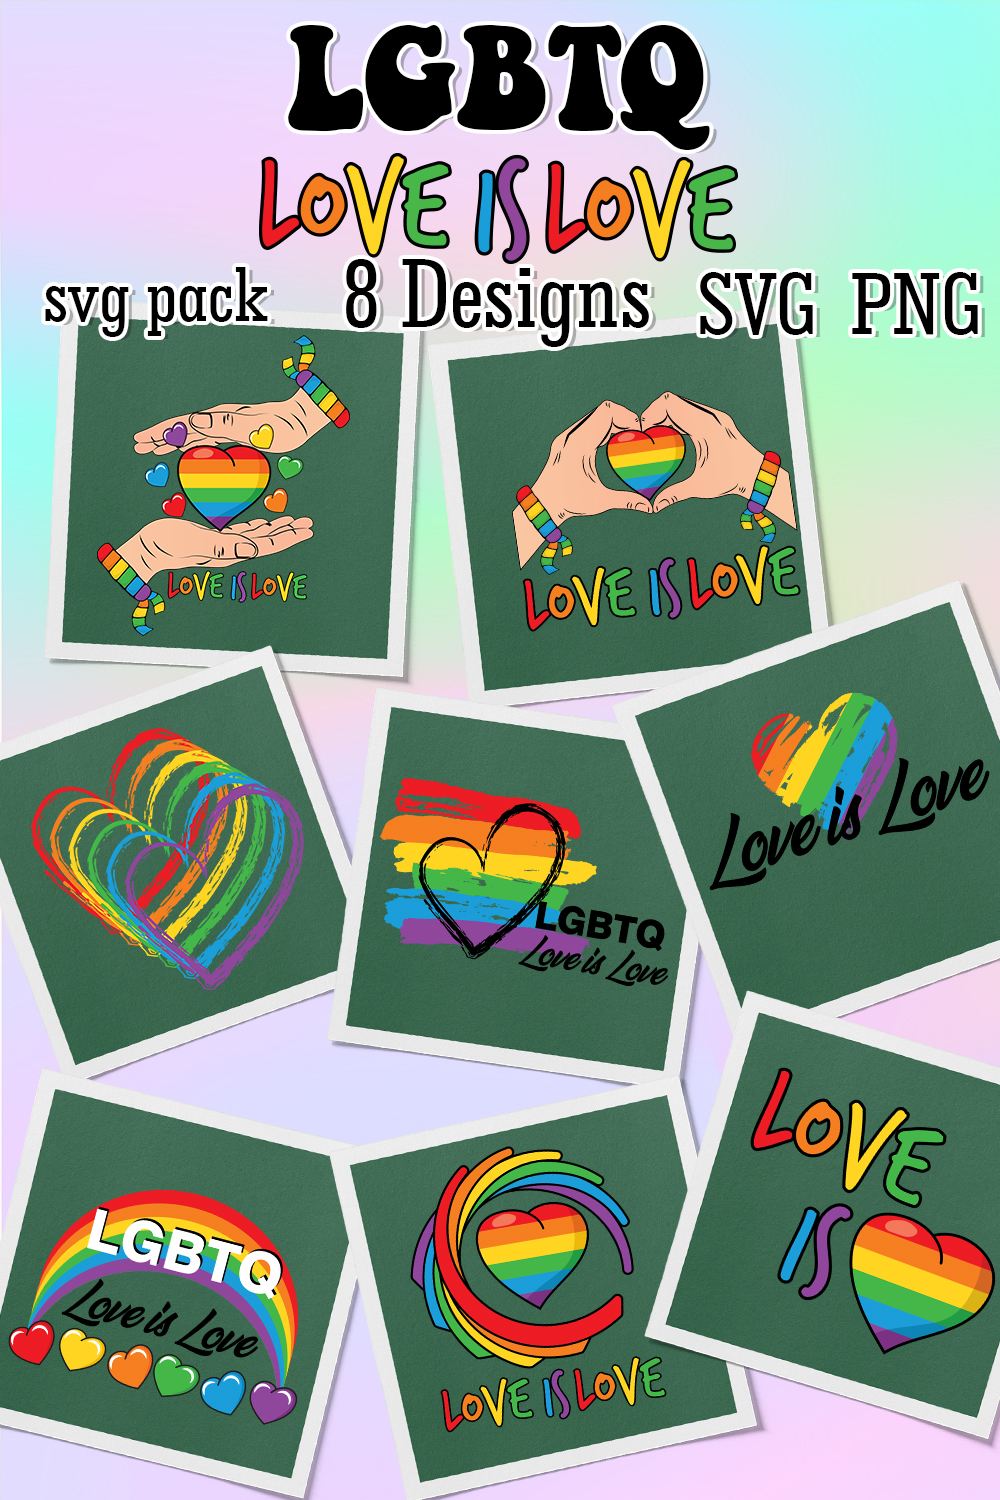 LGBTQ love is love svg of pinterest.